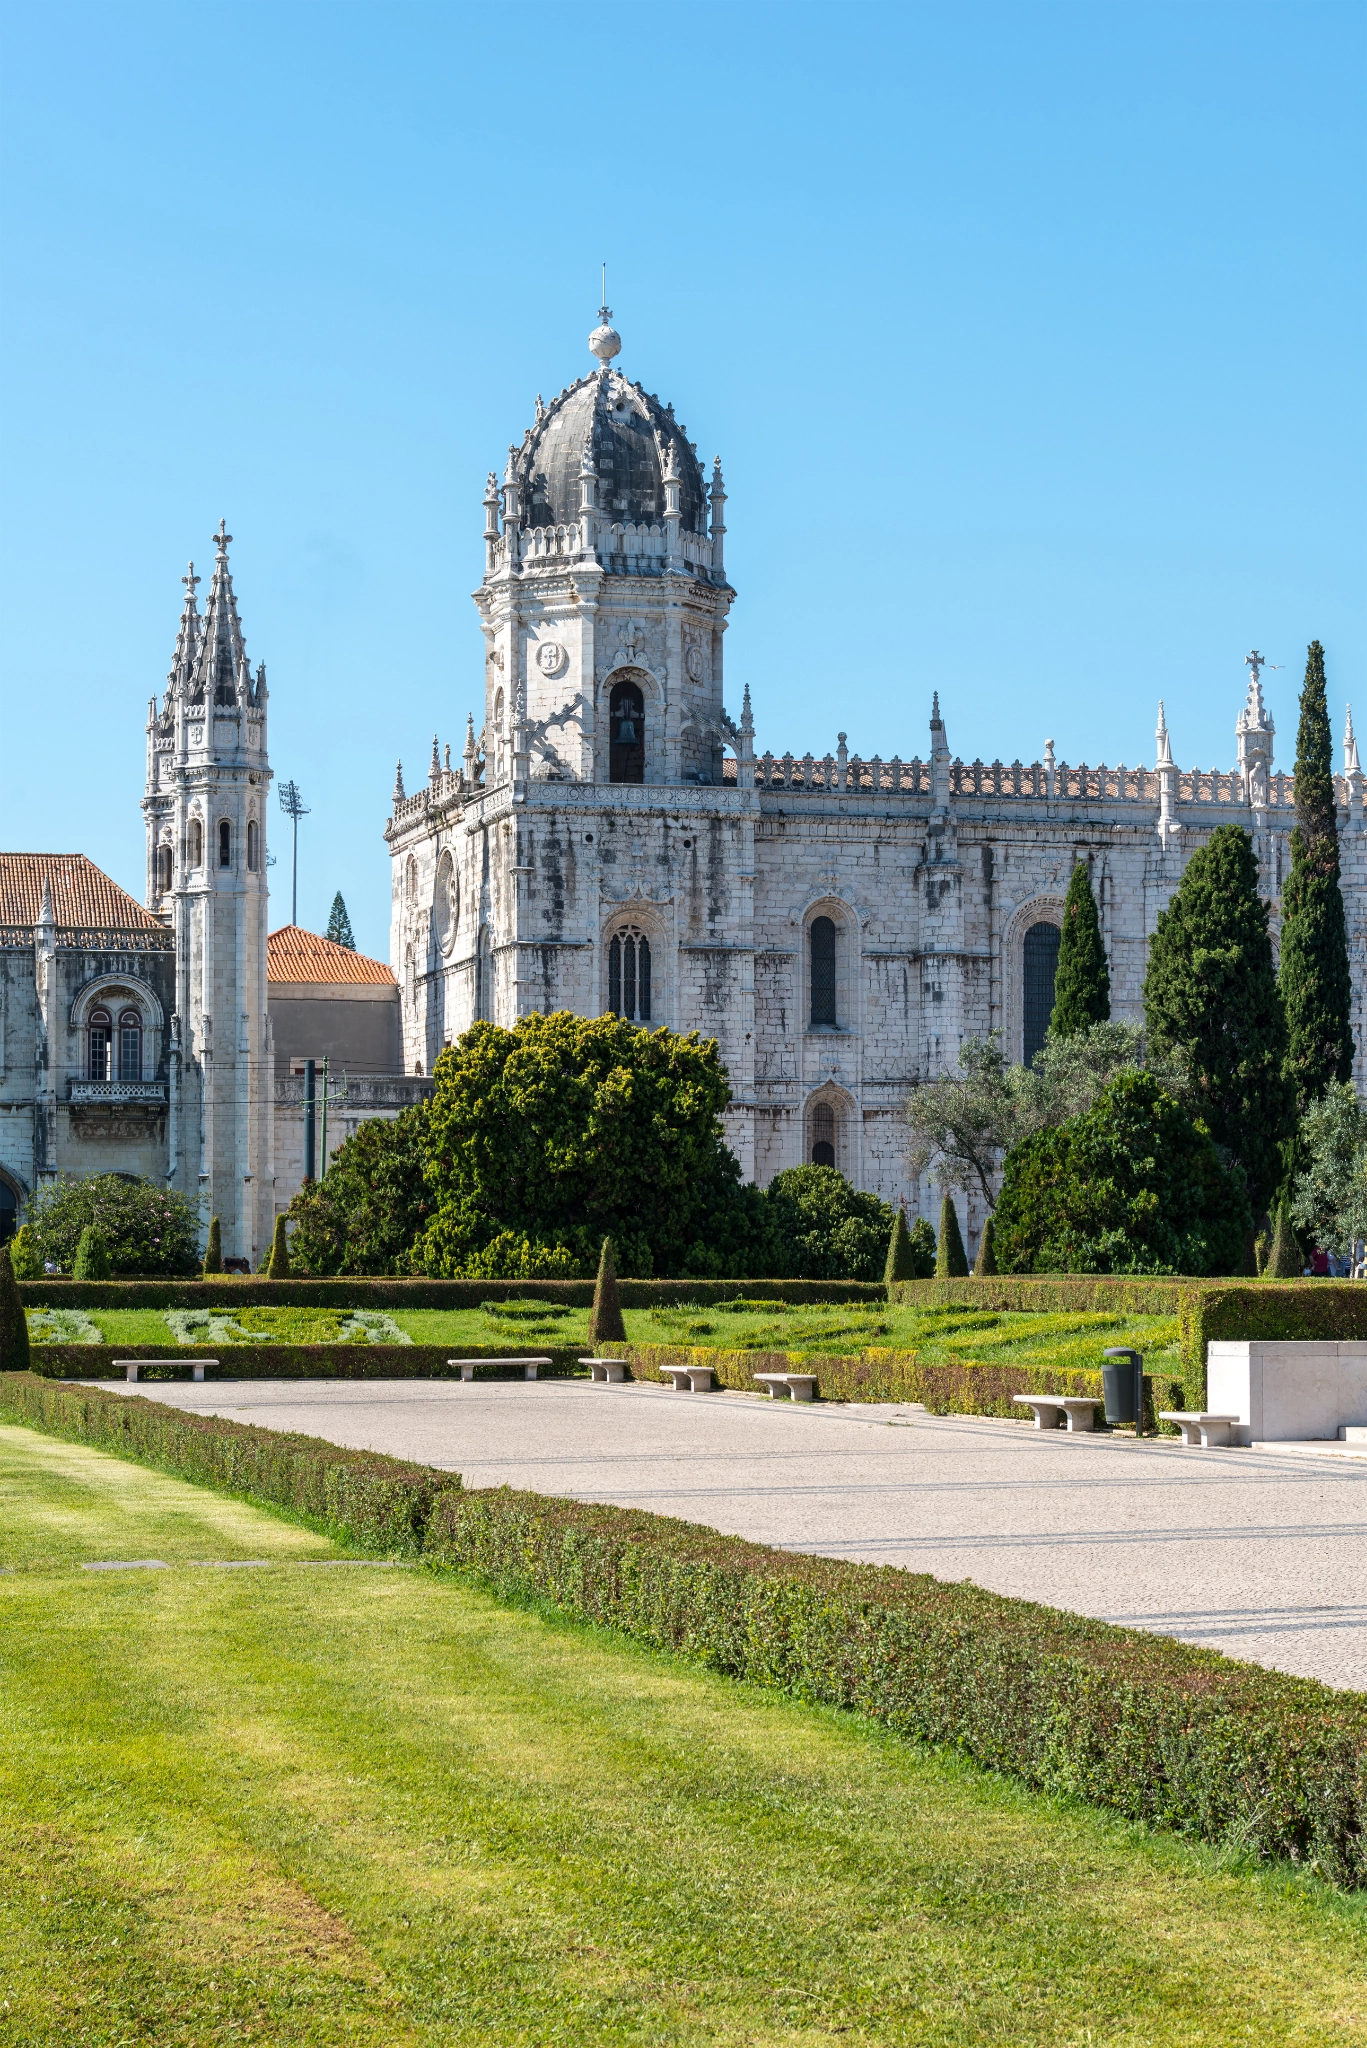 Mosteiro dos Jerónimos in Belem, Lisbon